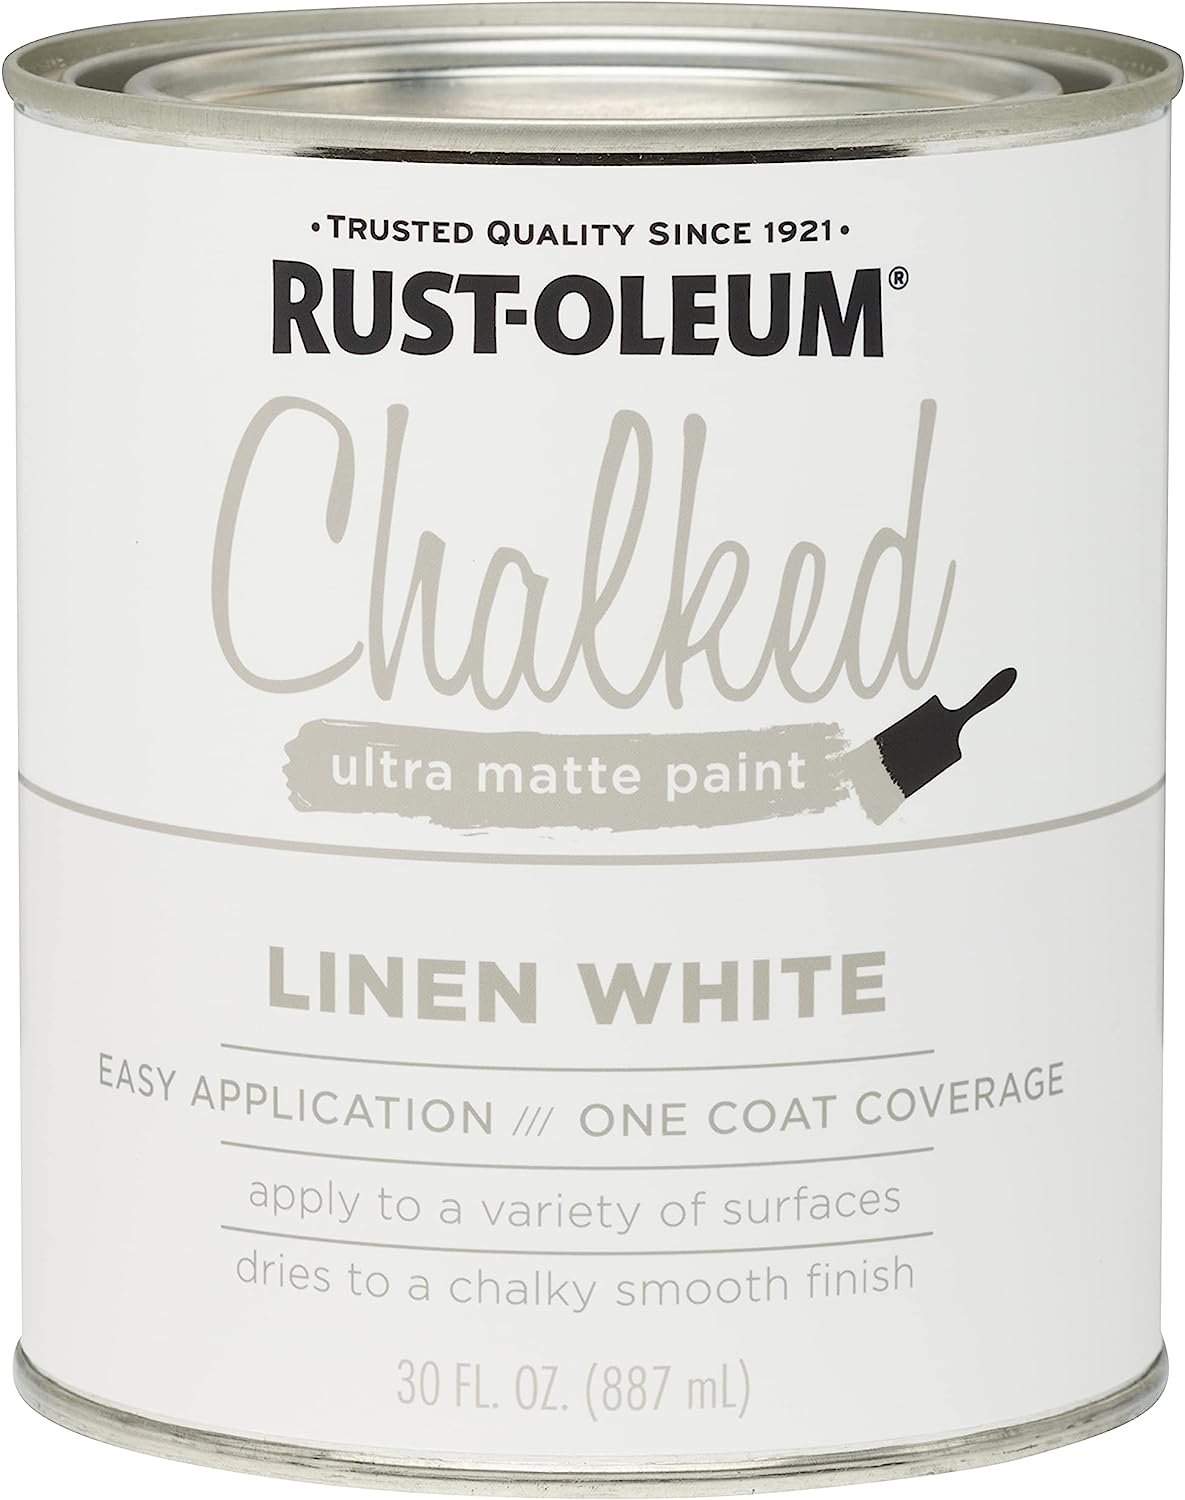 Rust-Oleum 285140 Ultra Matte Interior Chalked Acrylic [...]